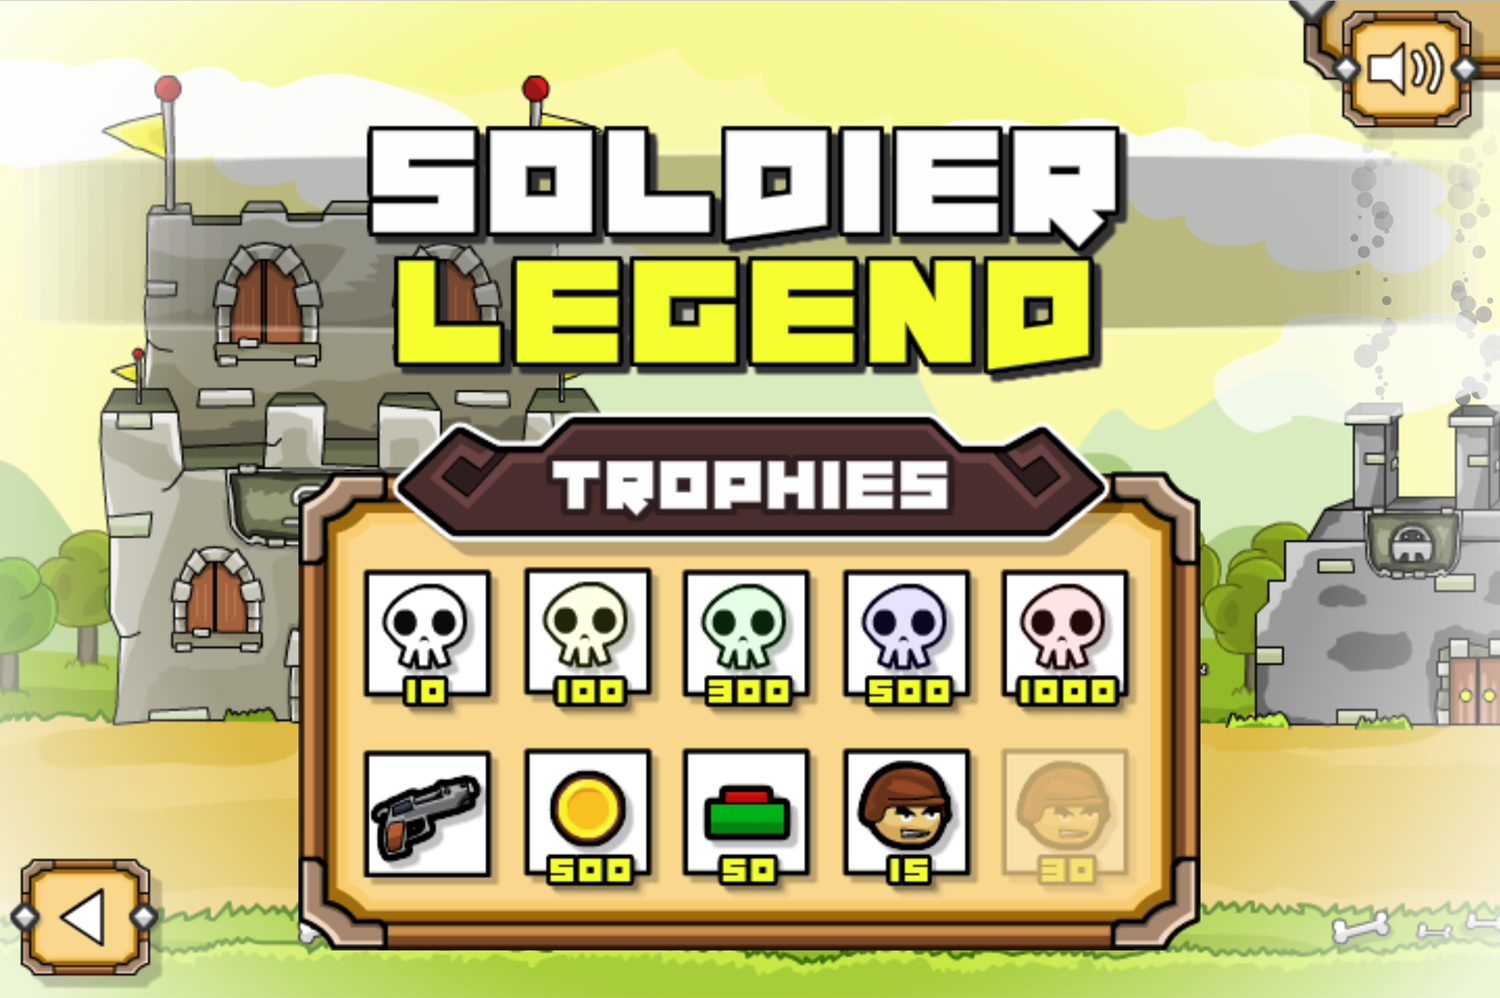 Soldier Legend Game Trophies Screen Screenshot.